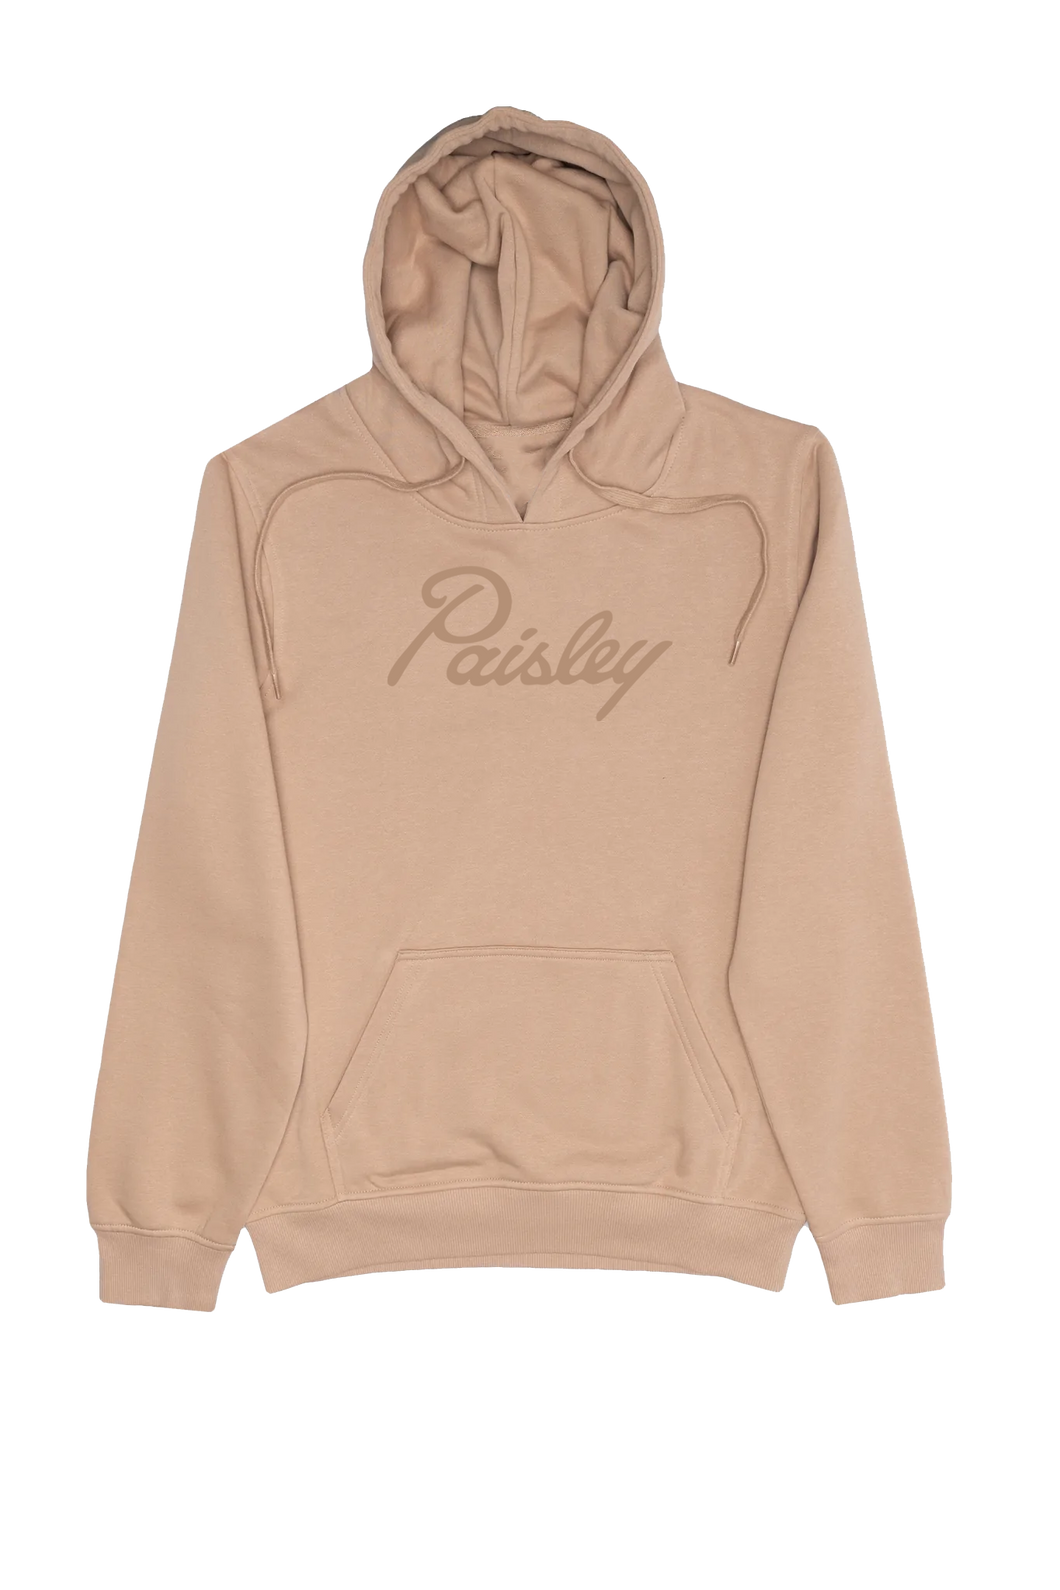 Paisley Logo Hoodie